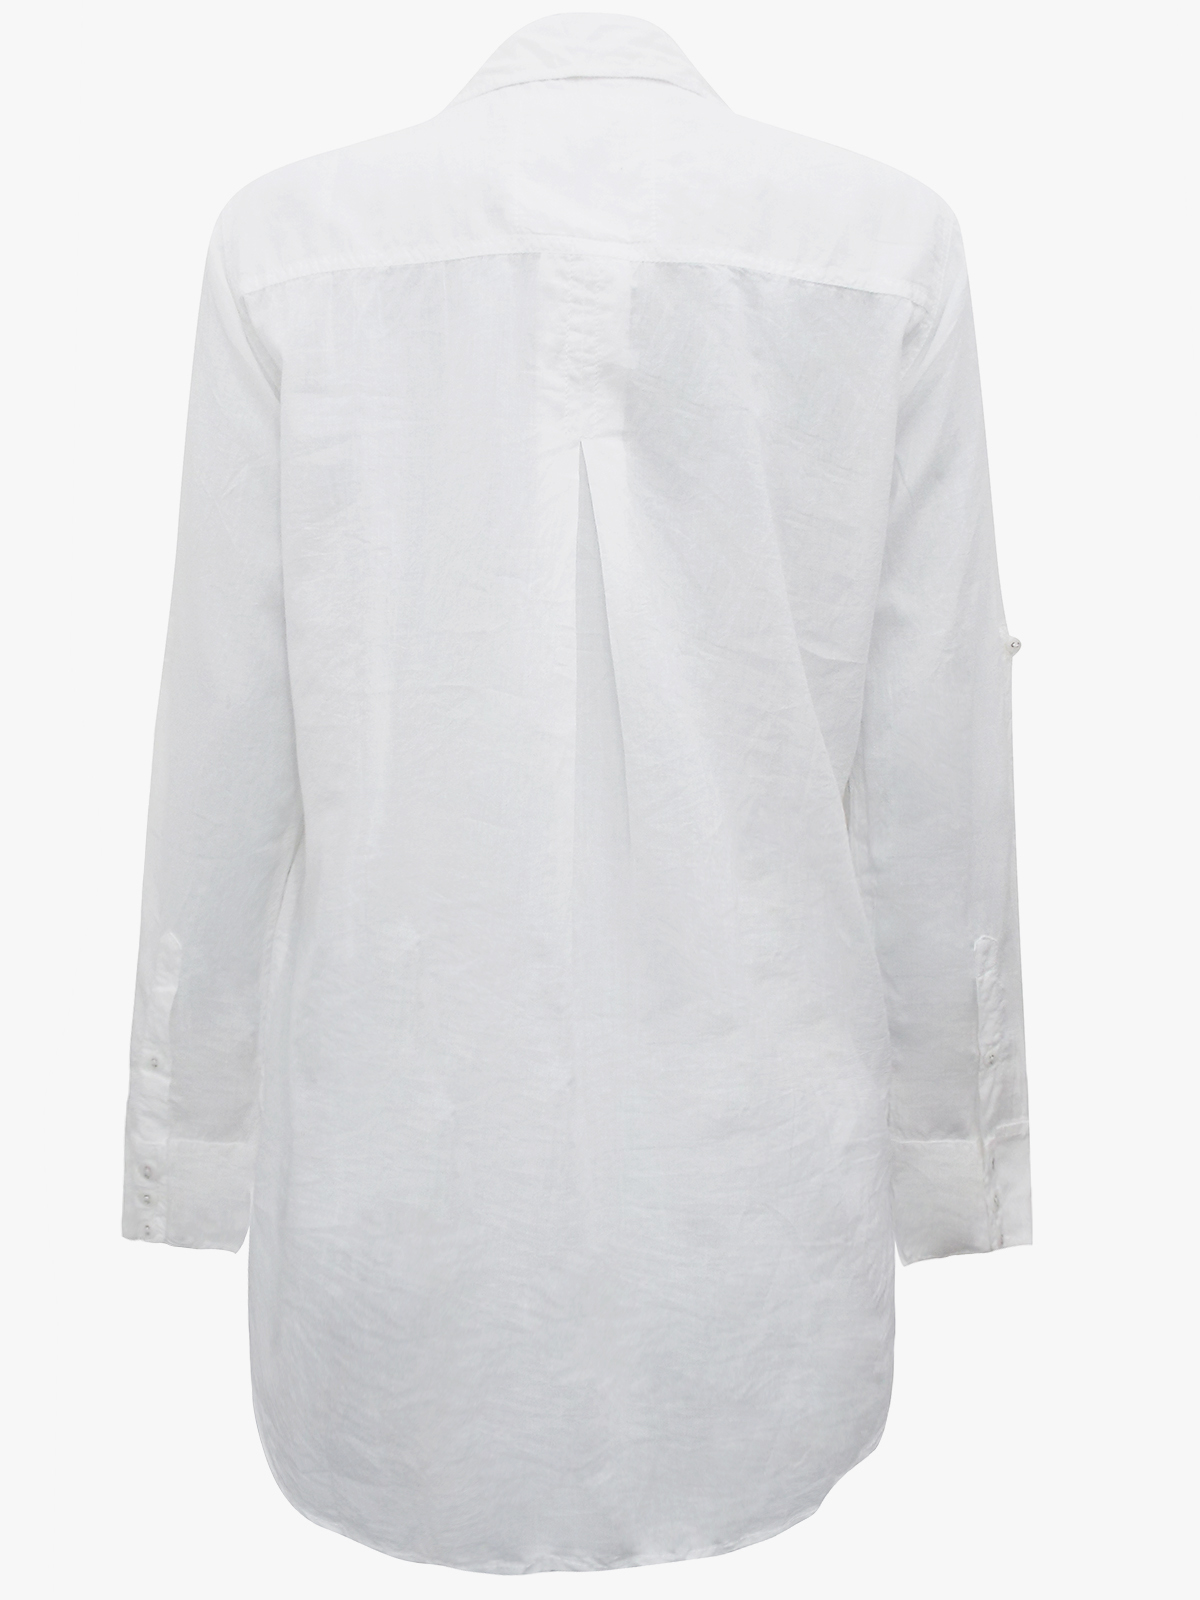 CINO - - CINO WHITE Dipped Hem Crinkle Cotton Shirt - Size 8 to 18 (XXS ...